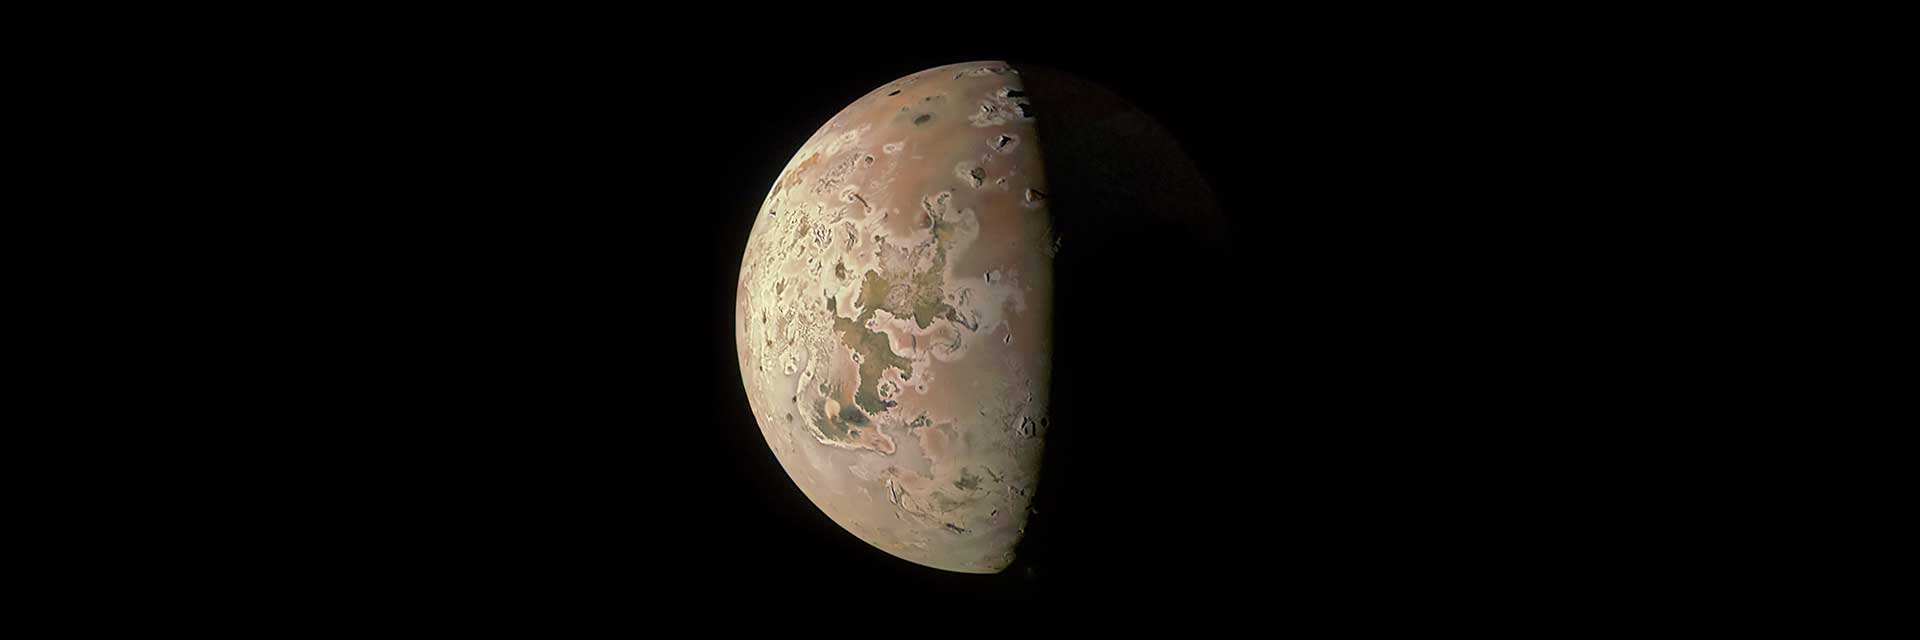 Partially lit moon Io.